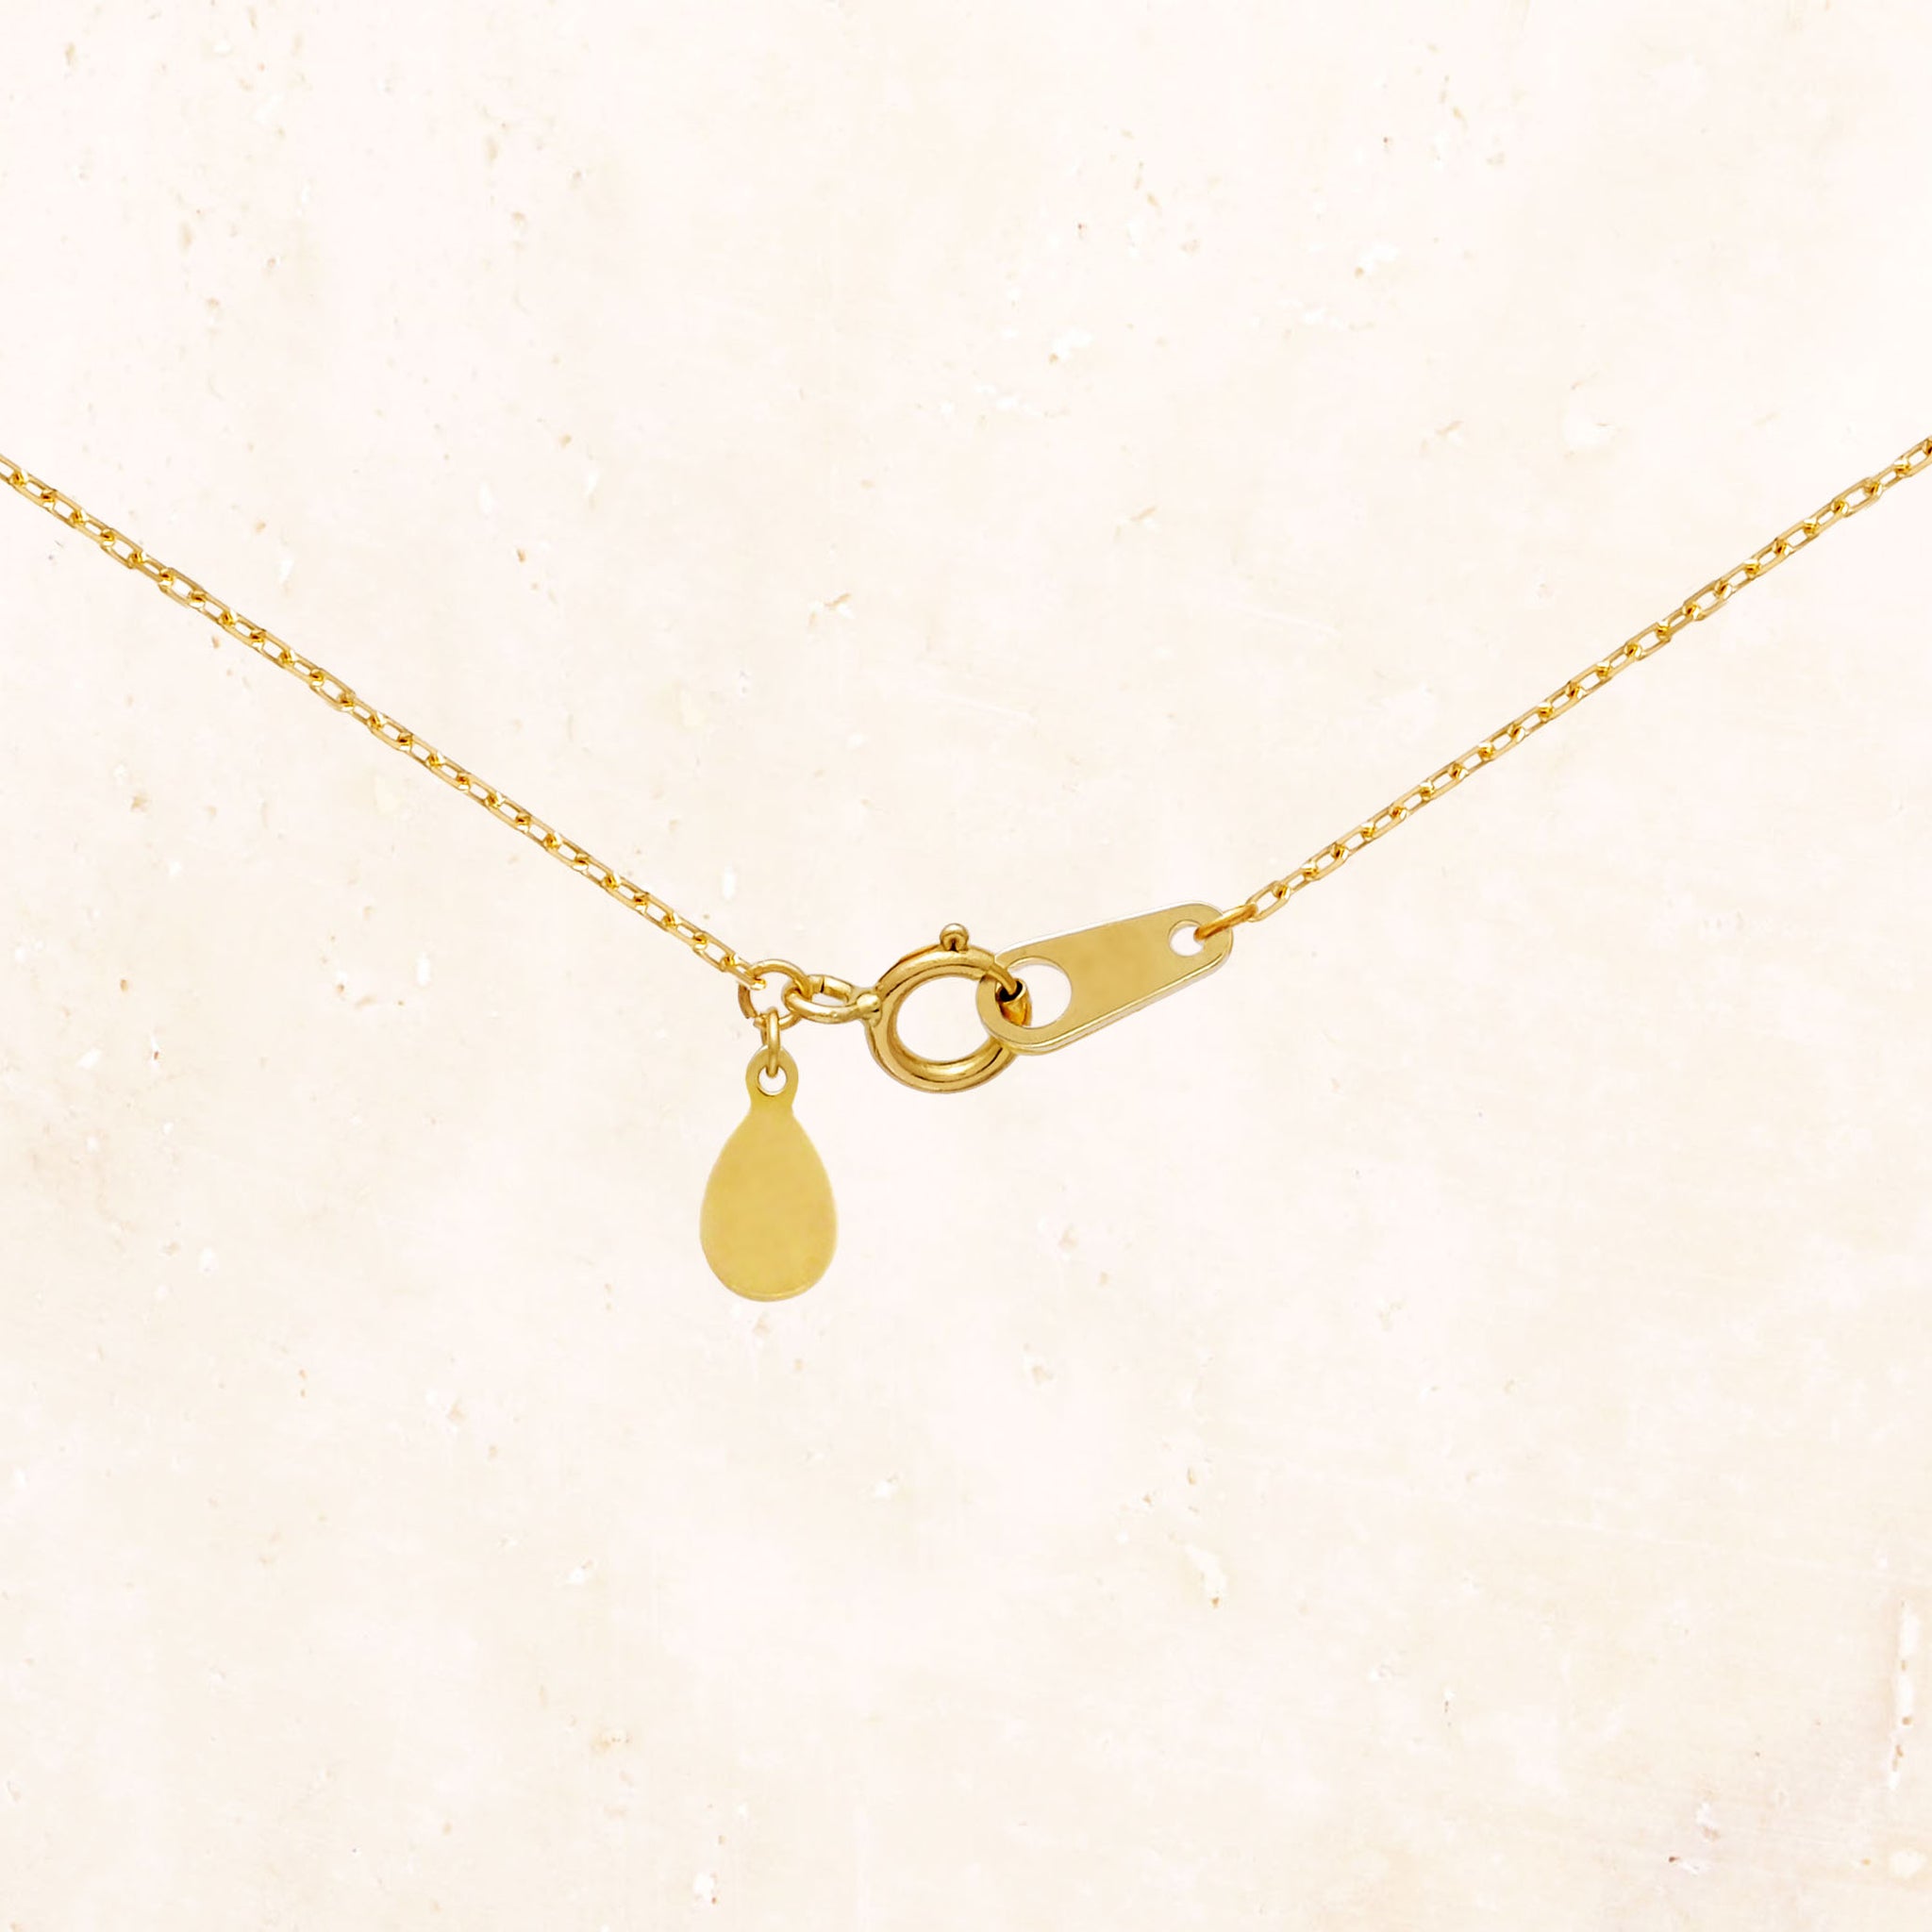 10K Gold Chain Necklace 45cm